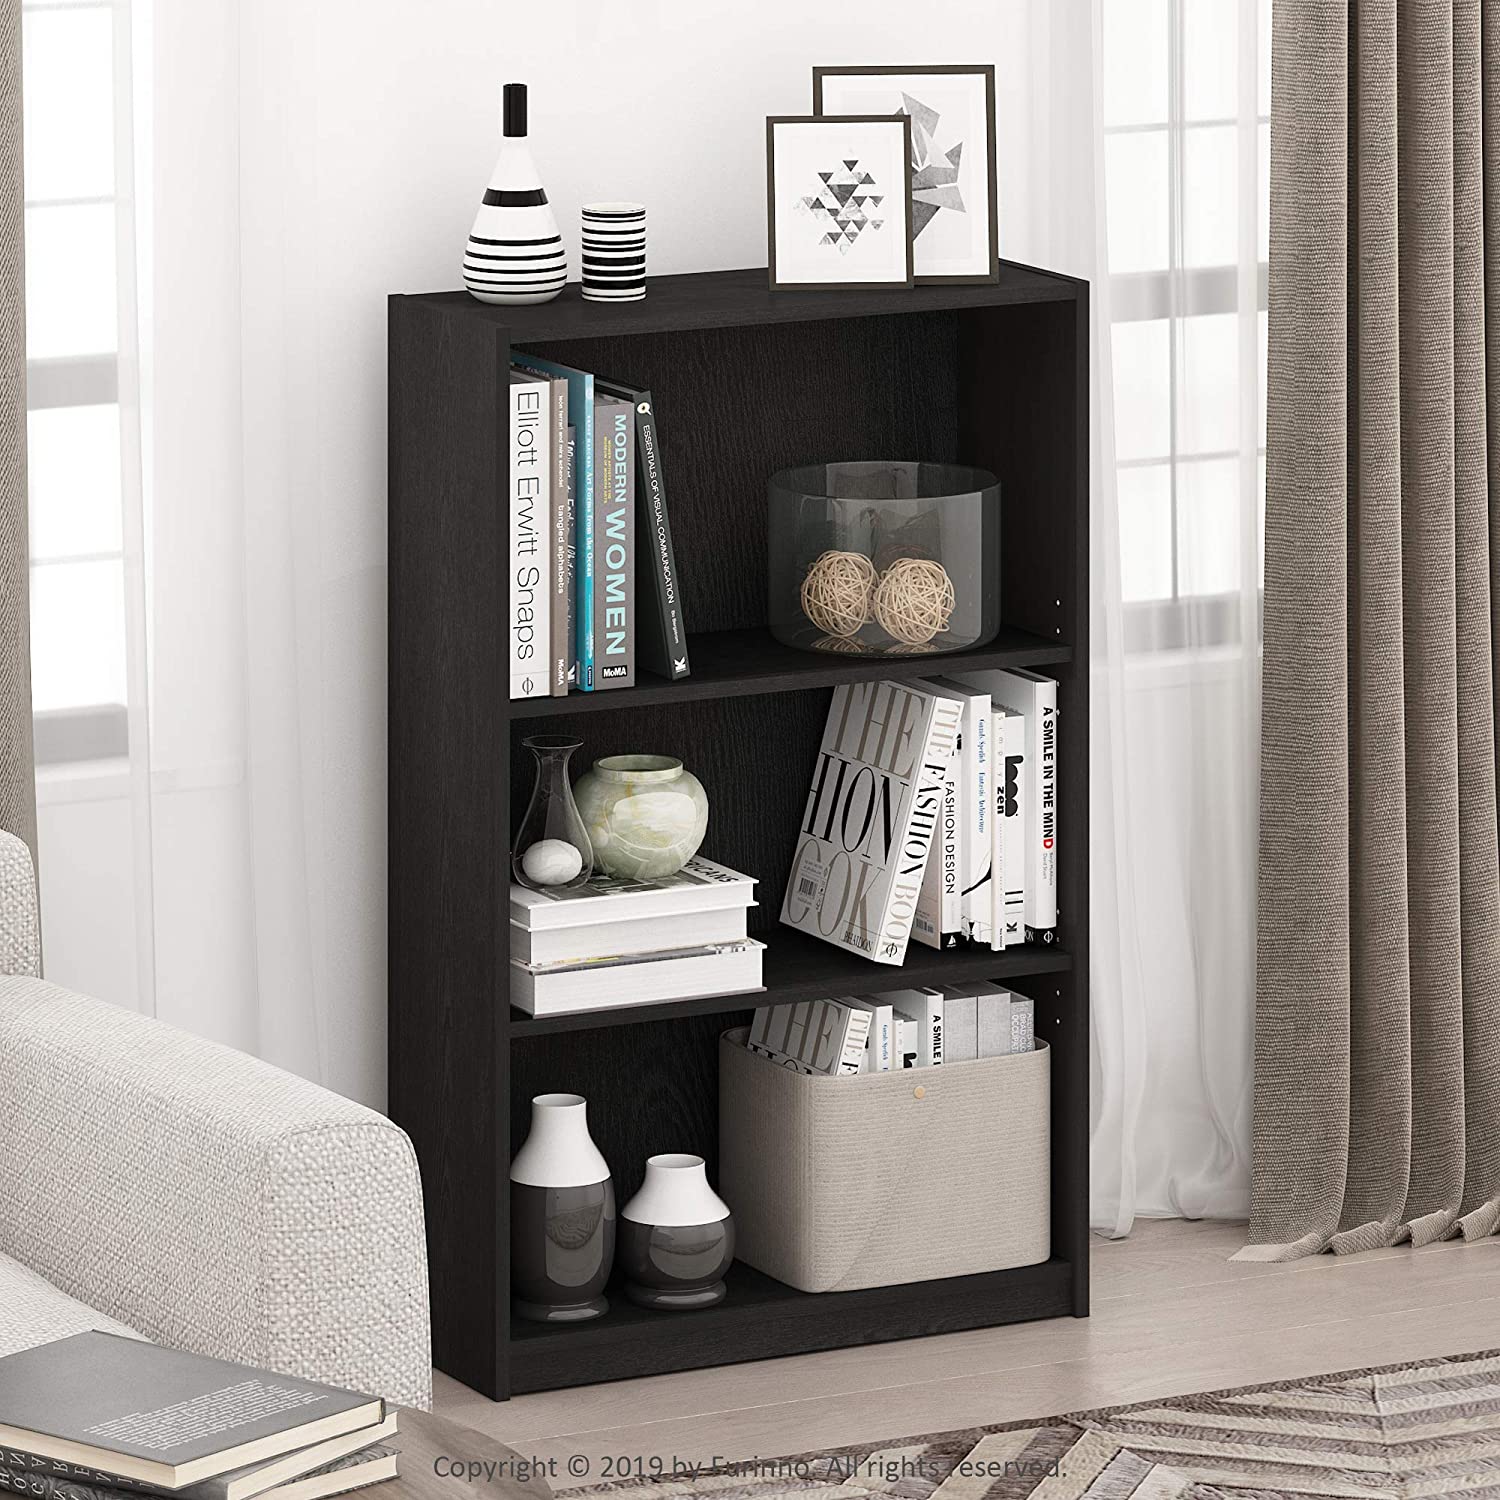 Furinno Jaya Simple Home Office Storage Bookshelf, 3-Tier